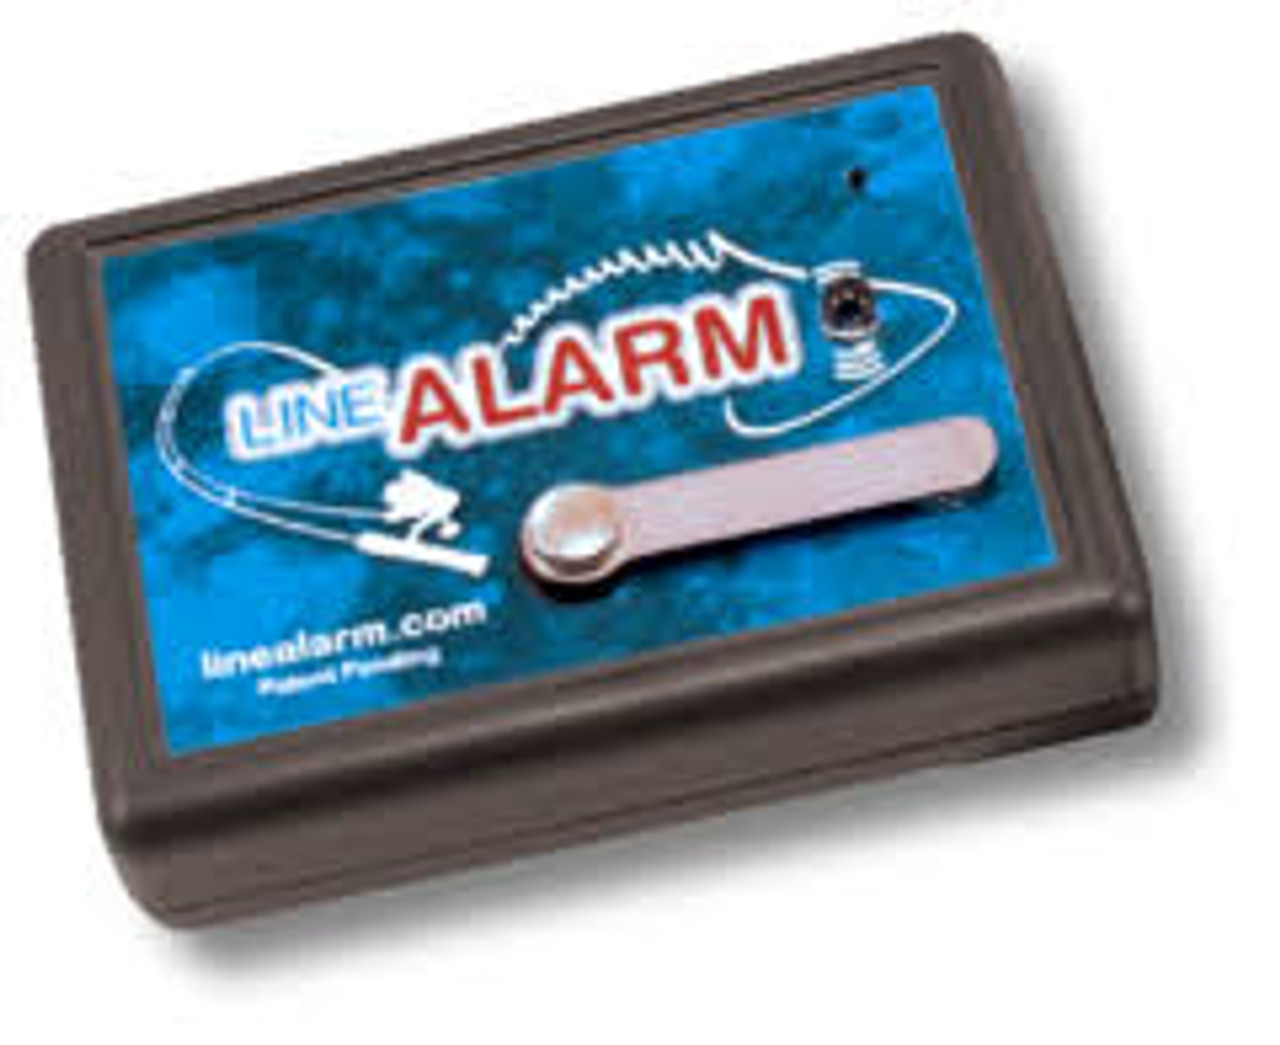 Line Alarm Fish Alarm